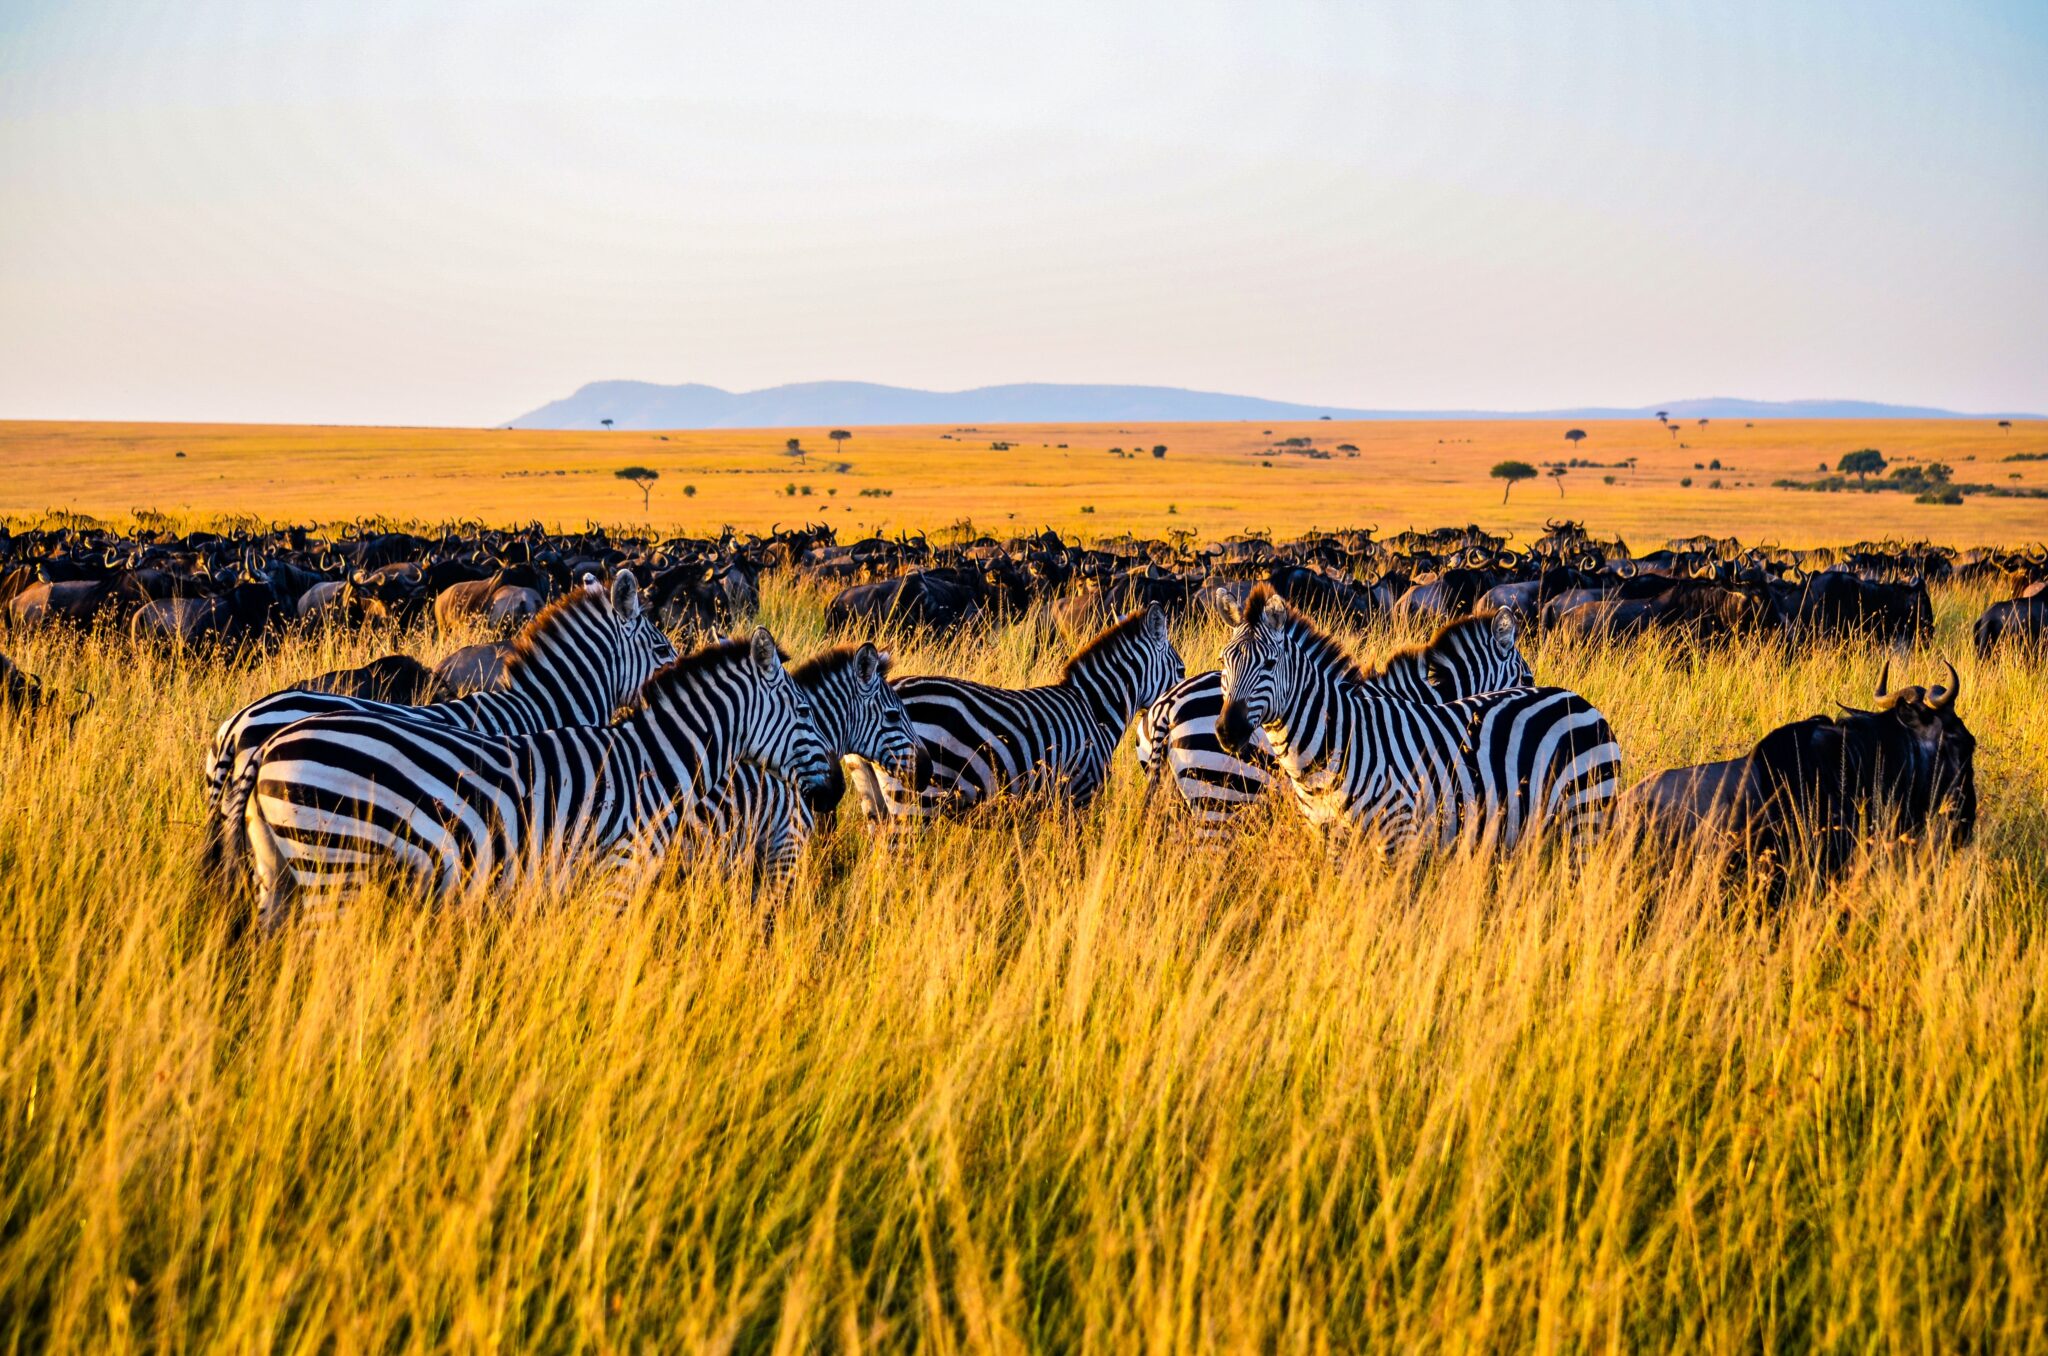 Beautiful-scenes-from-a-safari-in-the-natural-reserves-in-Kenya